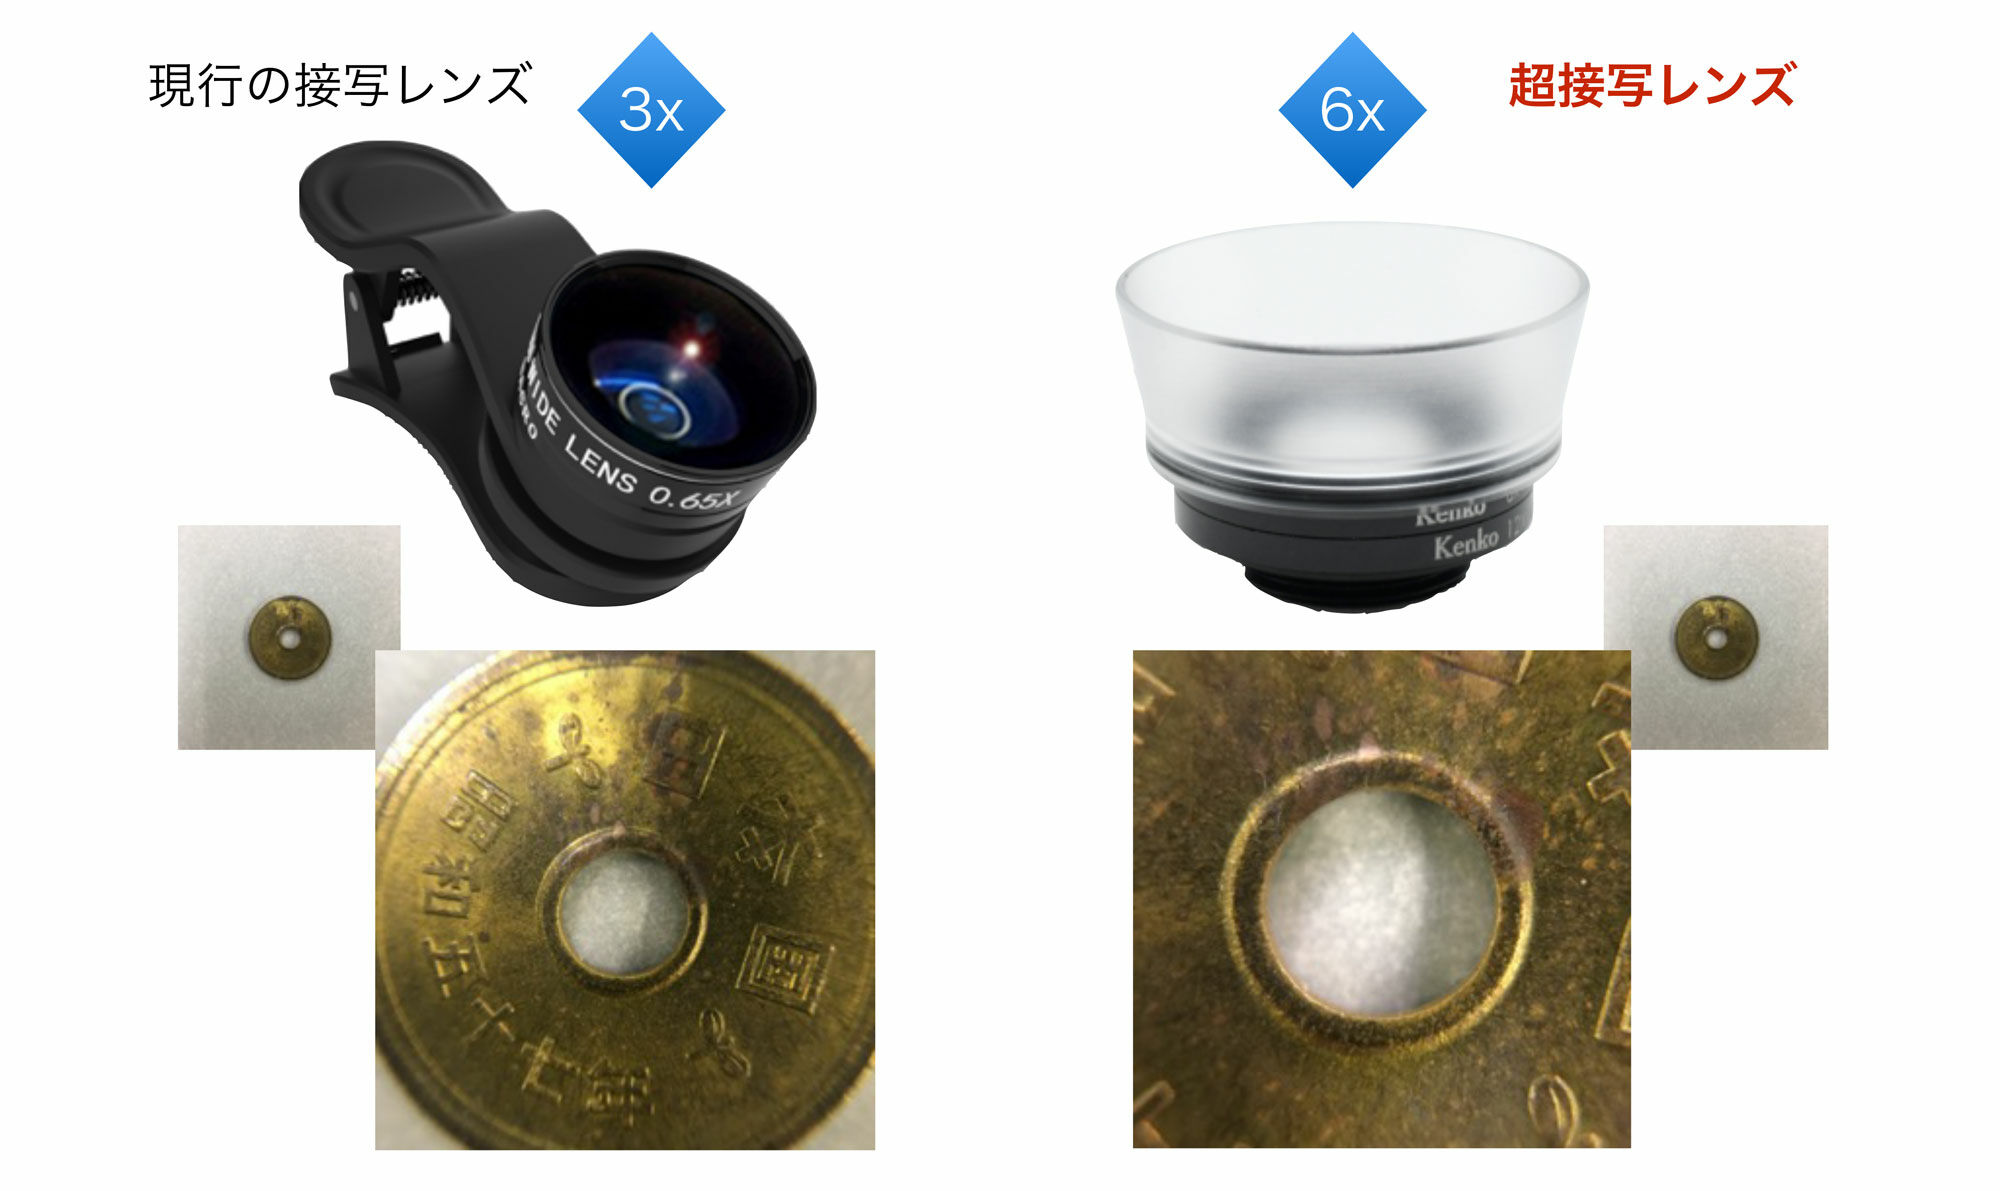 https://www.kenko-tokina.co.jp/imaging/mobile_accessory/mt-images/4961607798133_features03.jpg